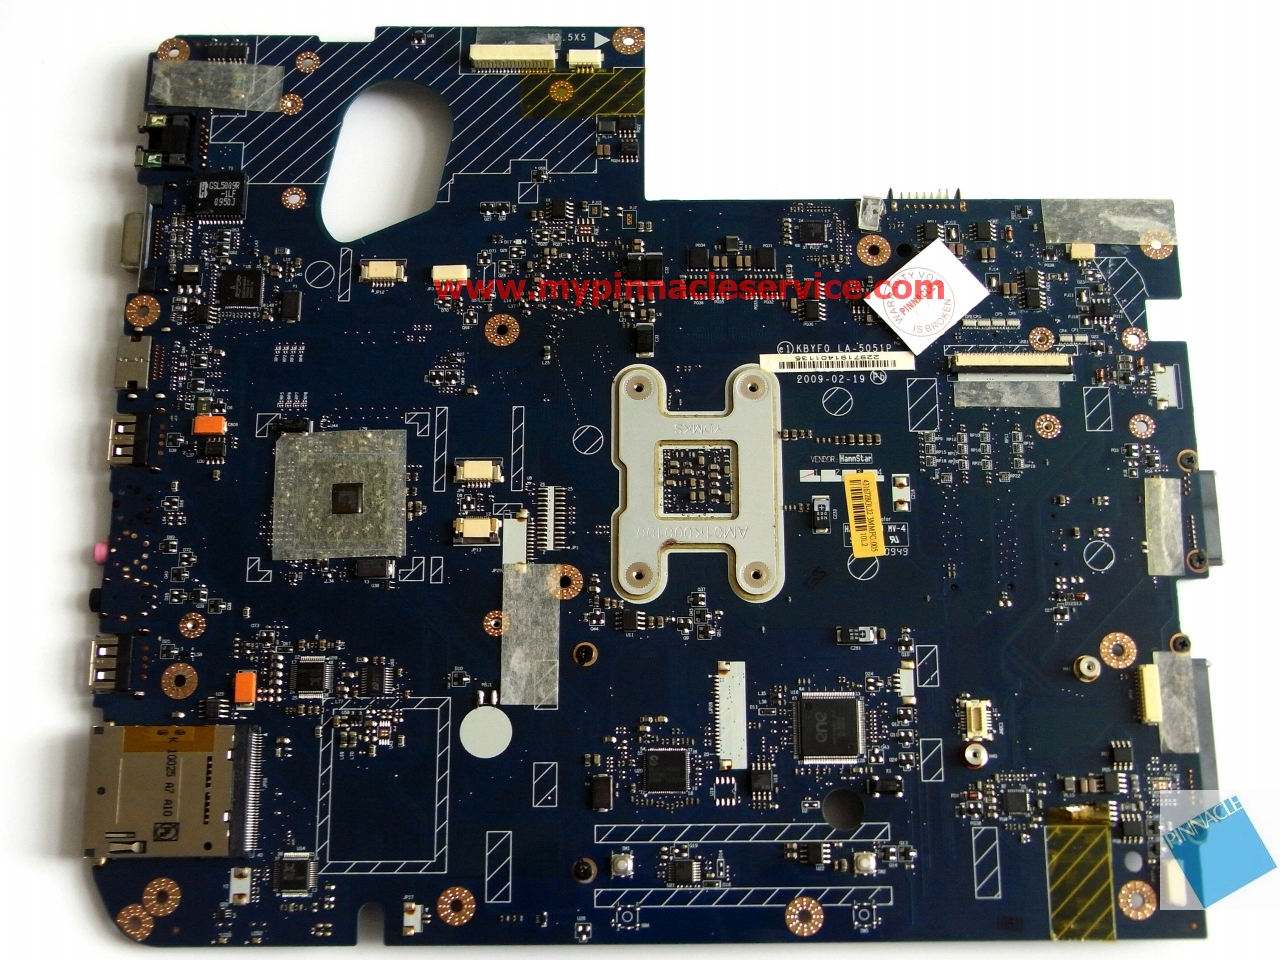 mbbcs02001-motherboard-for-packard-bell-lj-71-gateway-nv73-nbyf0-l22-la-5051p-461672b0l22-rimg0038.jpg